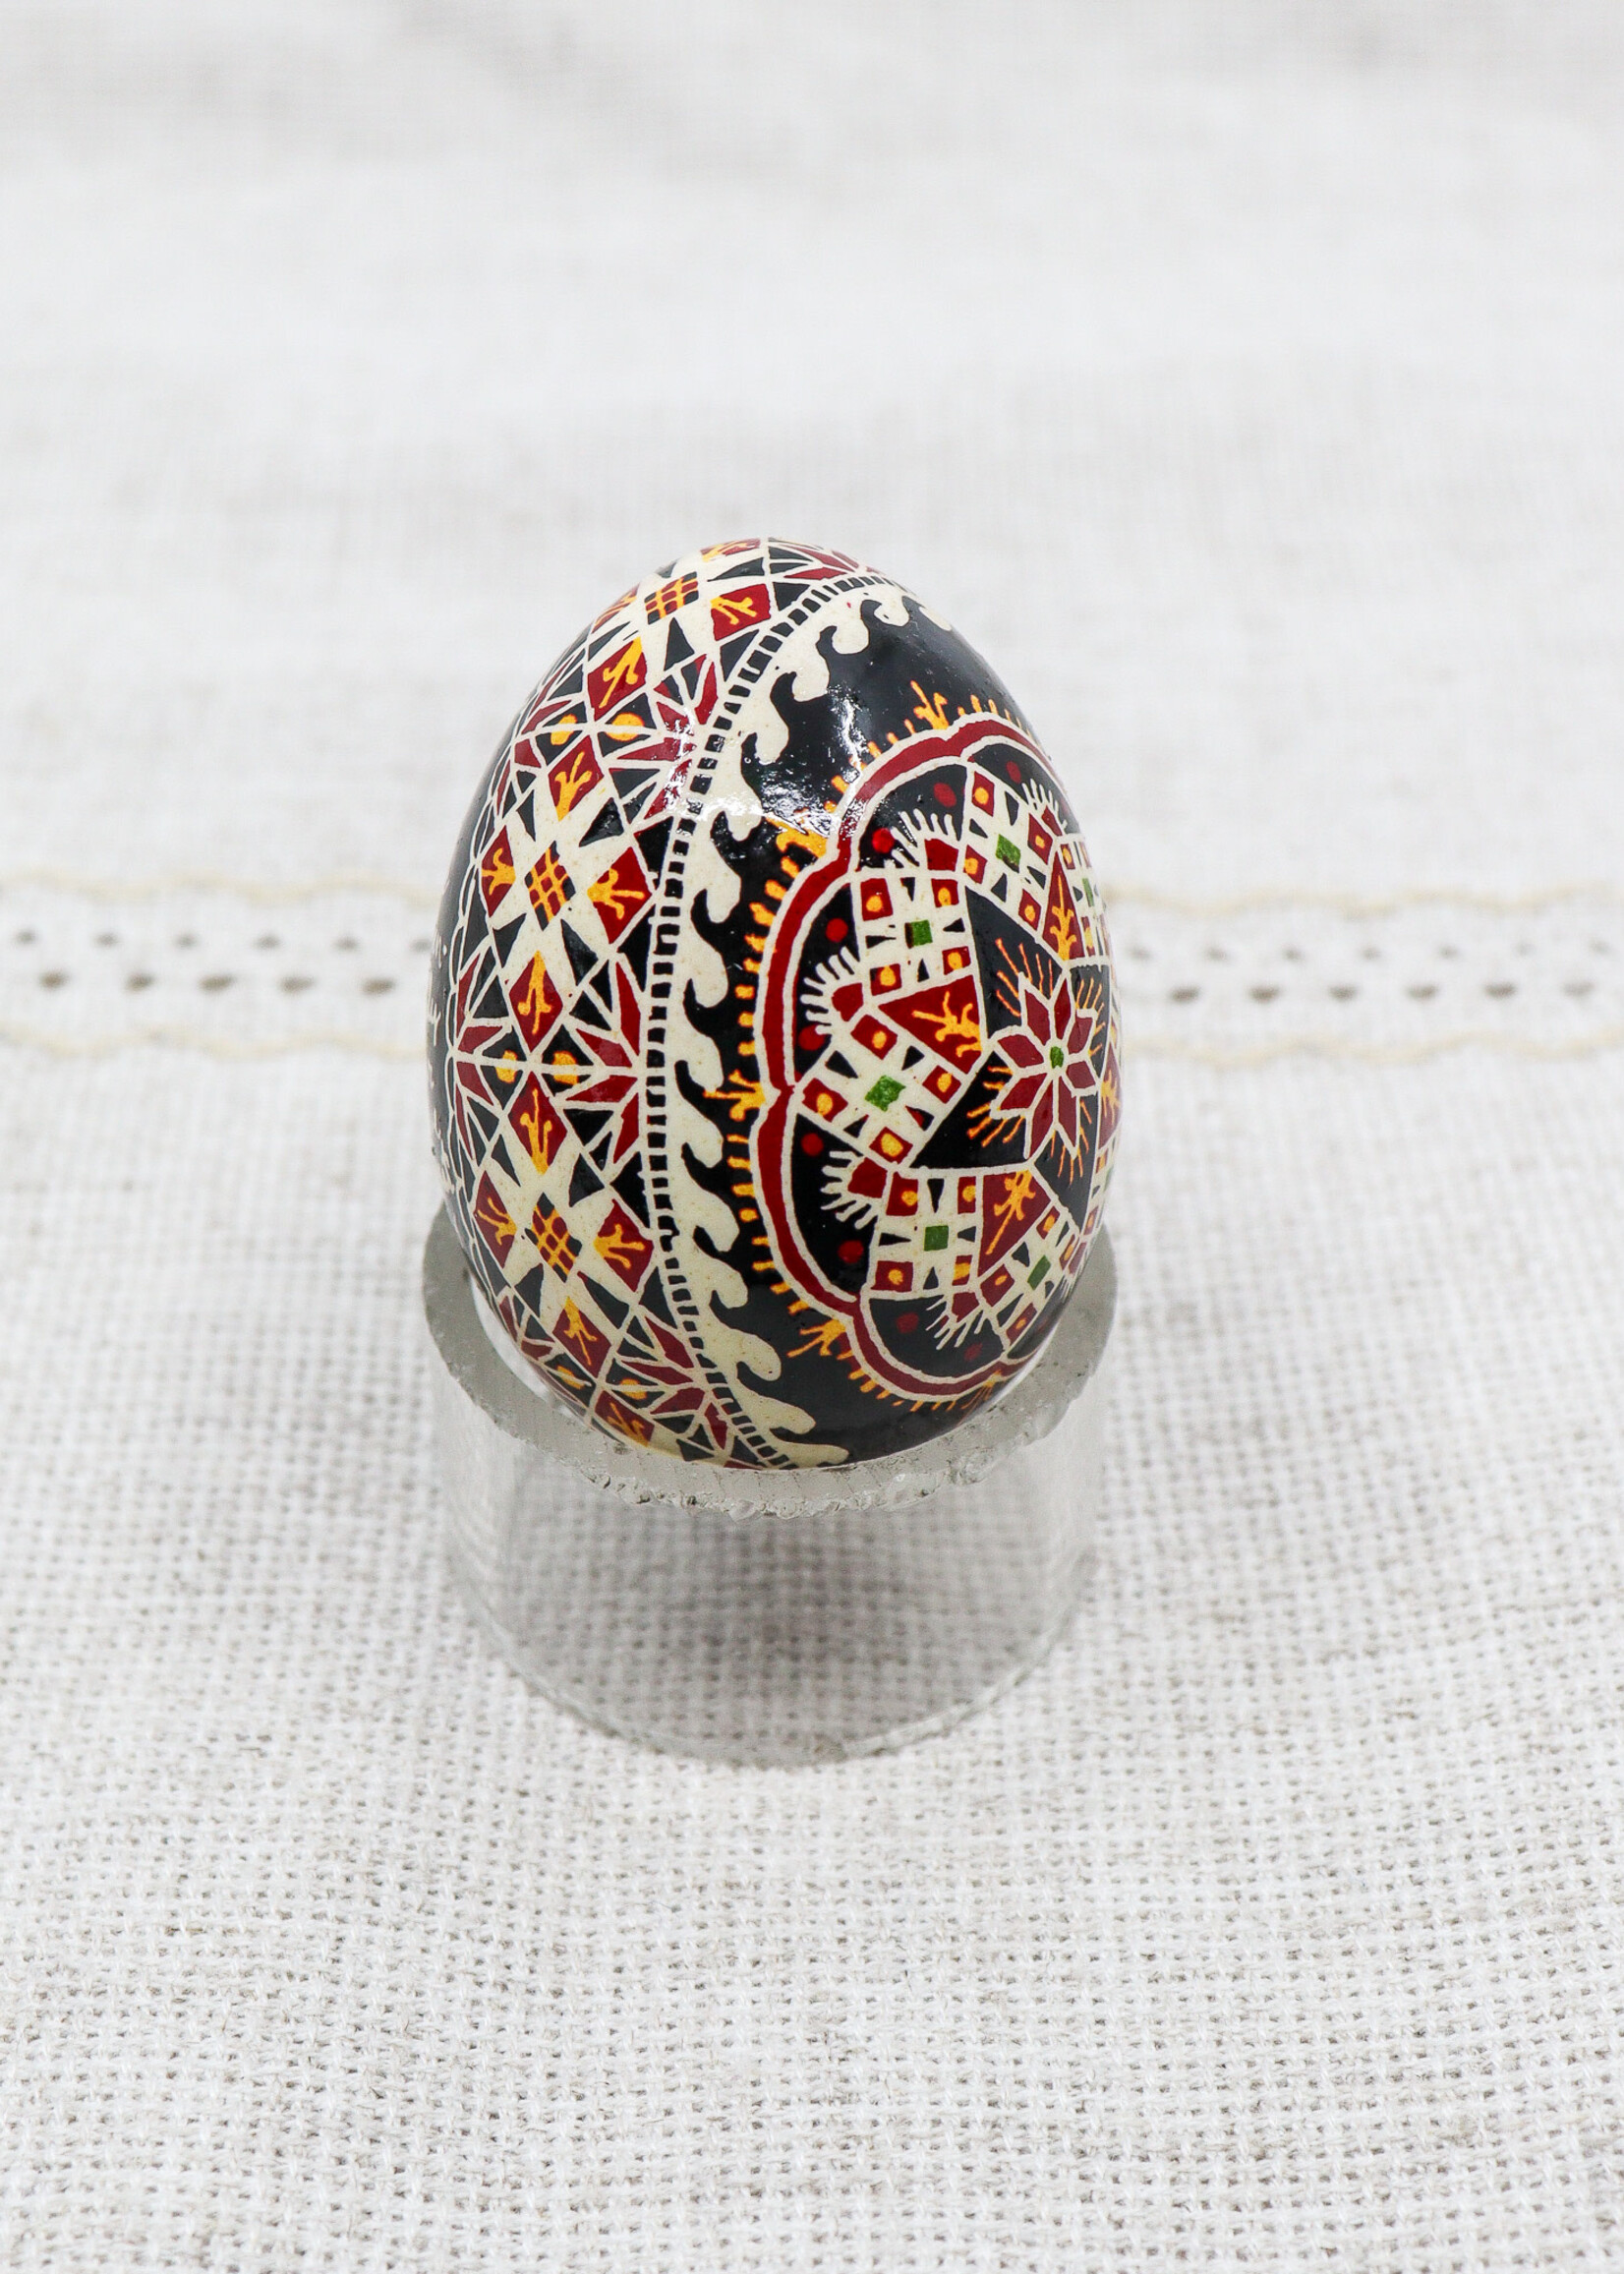 PYSANKA -  Ukrainian style handmade decorated eggs (Prayer in English)